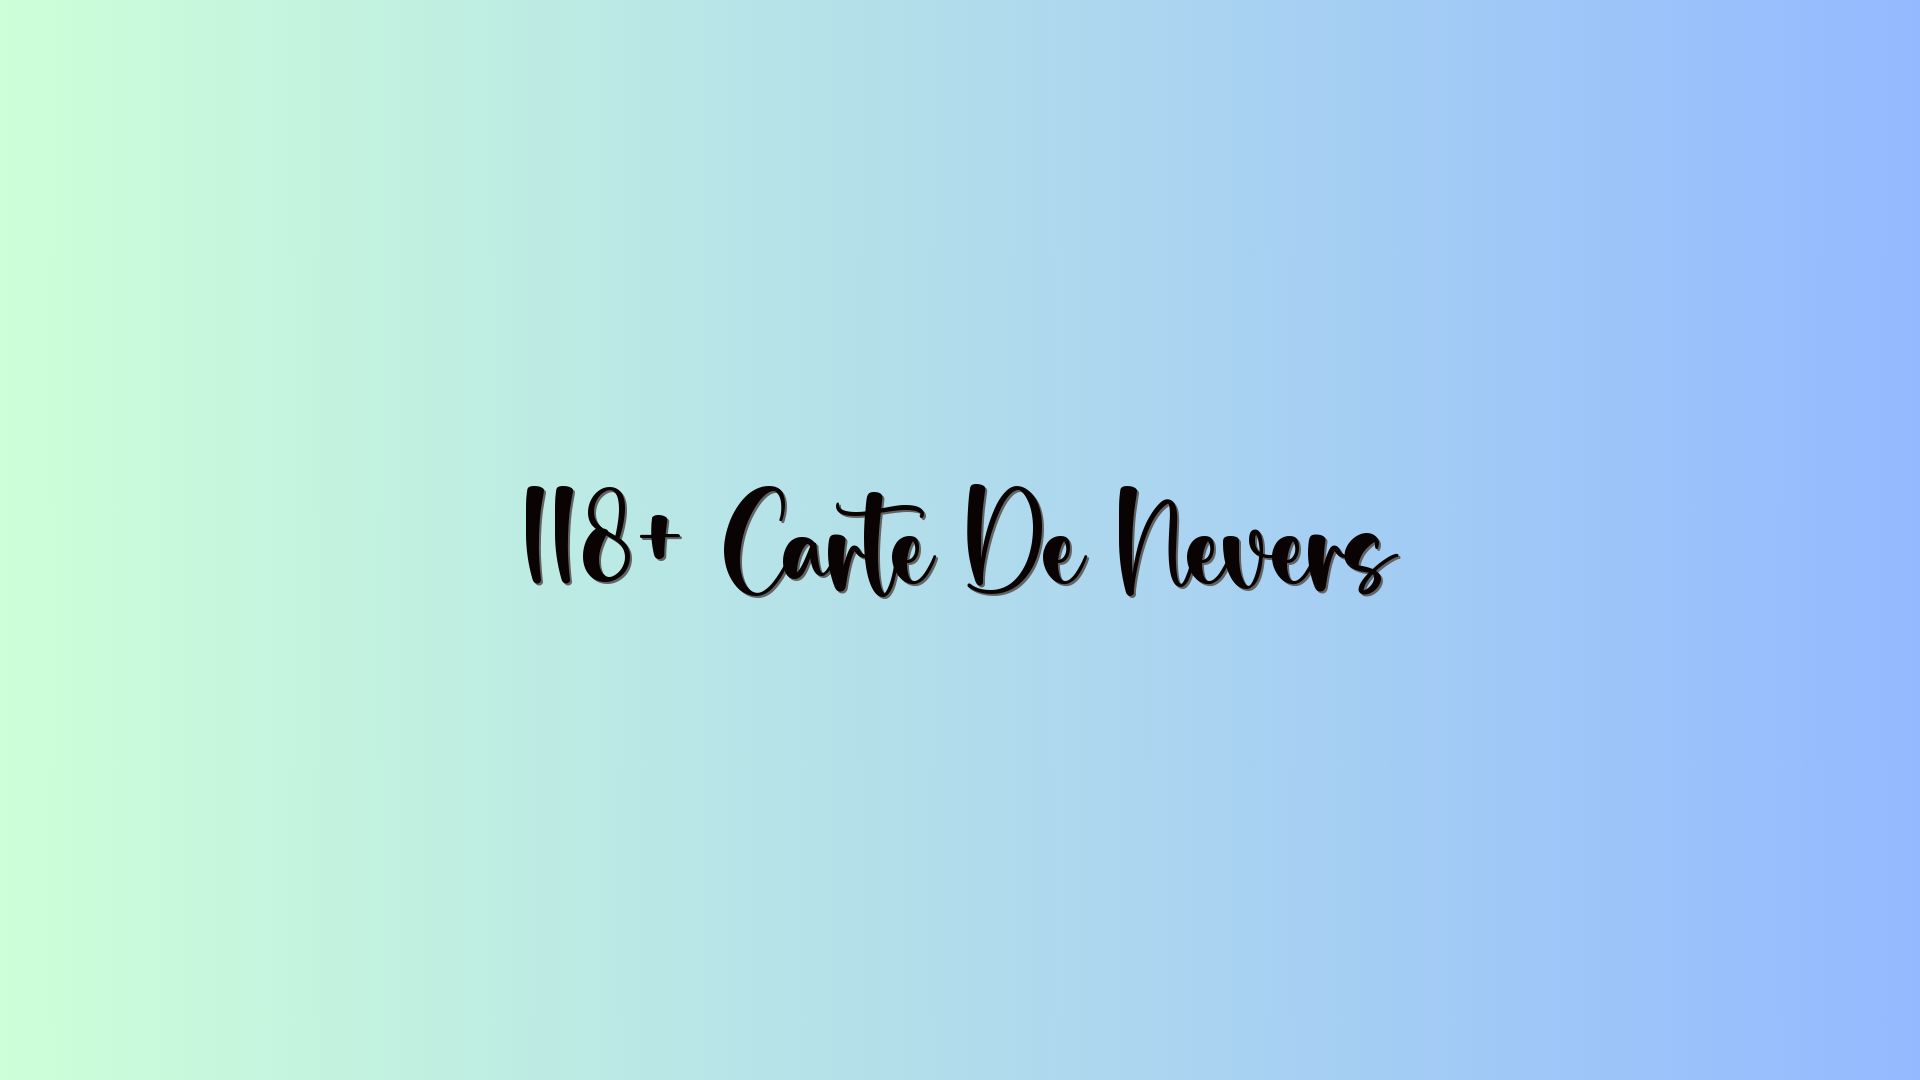 118+ Carte De Nevers